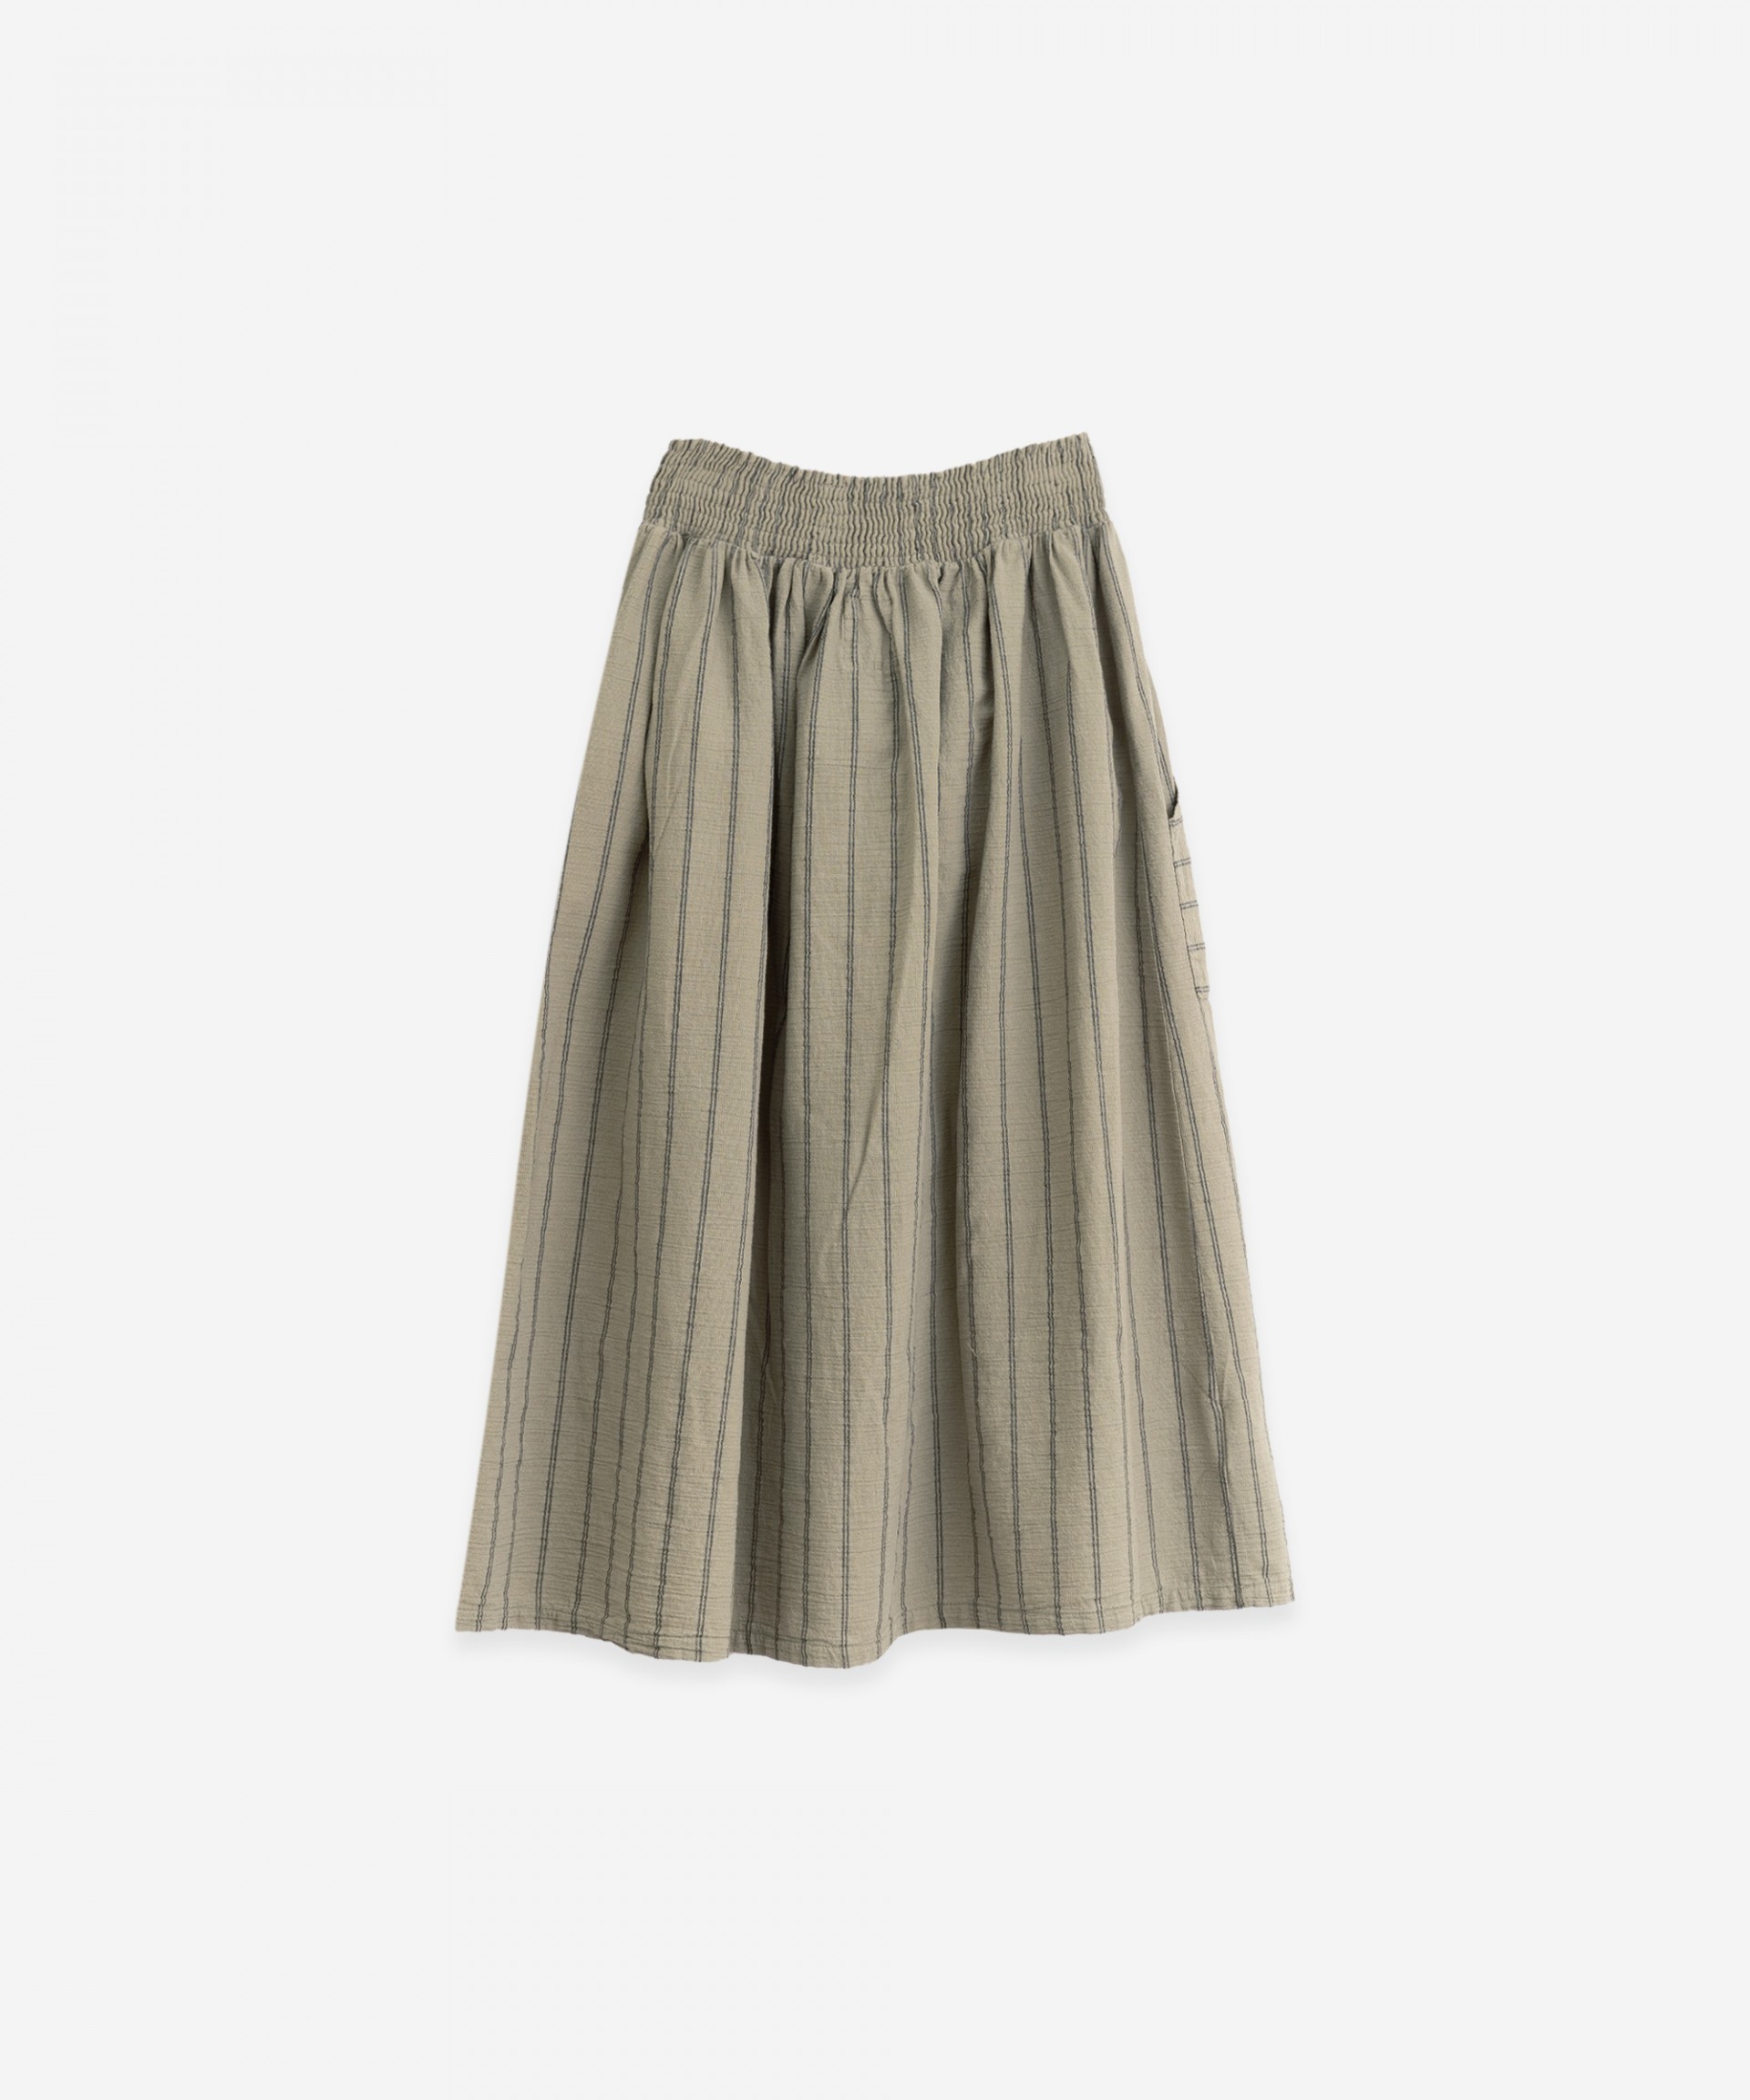 Striped skirt with pockets | Botany